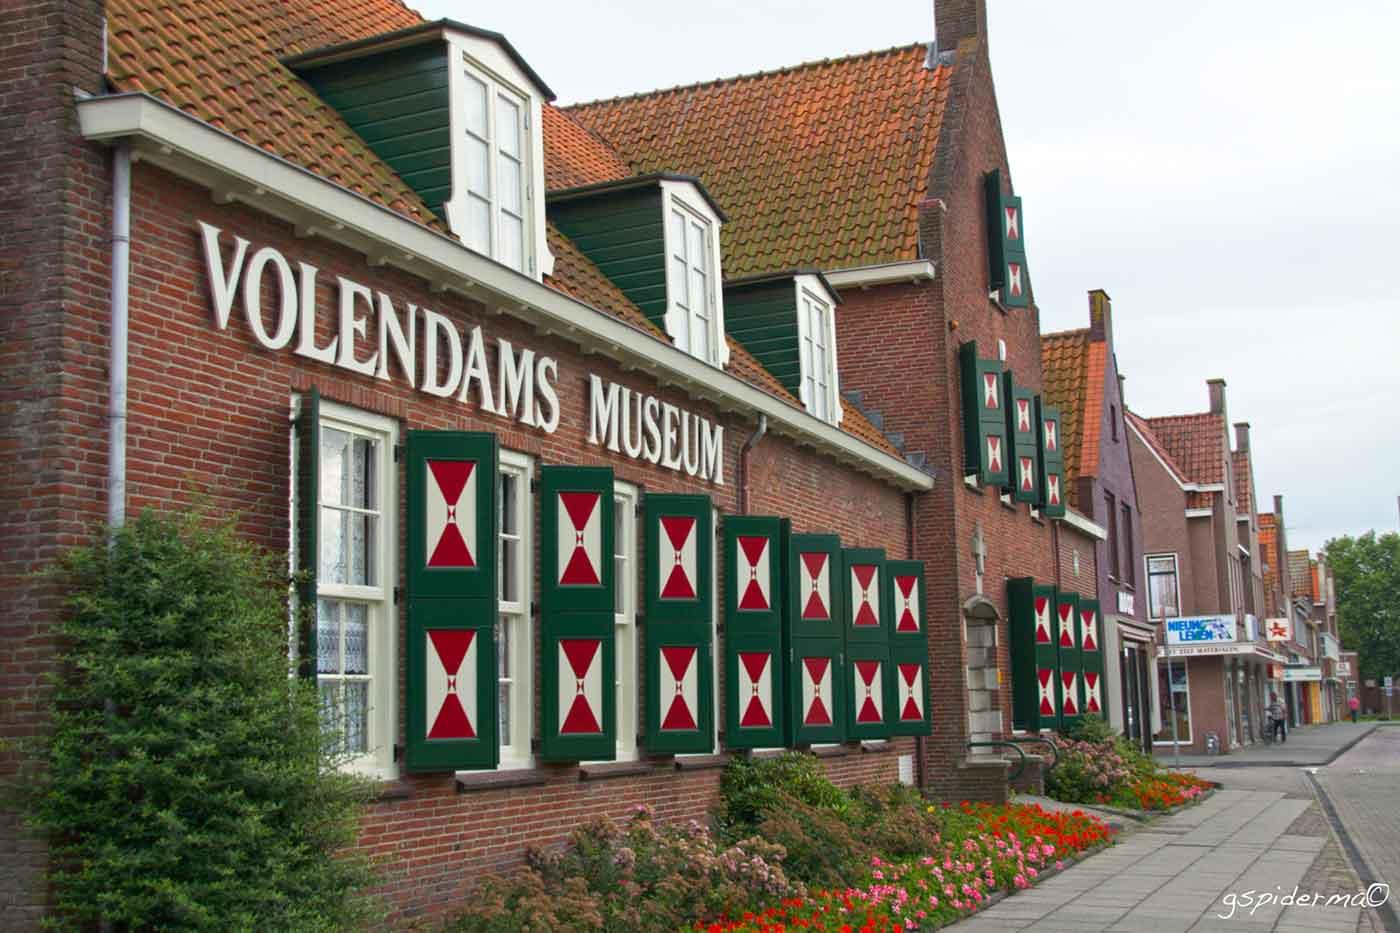 Volendam Museum Overview